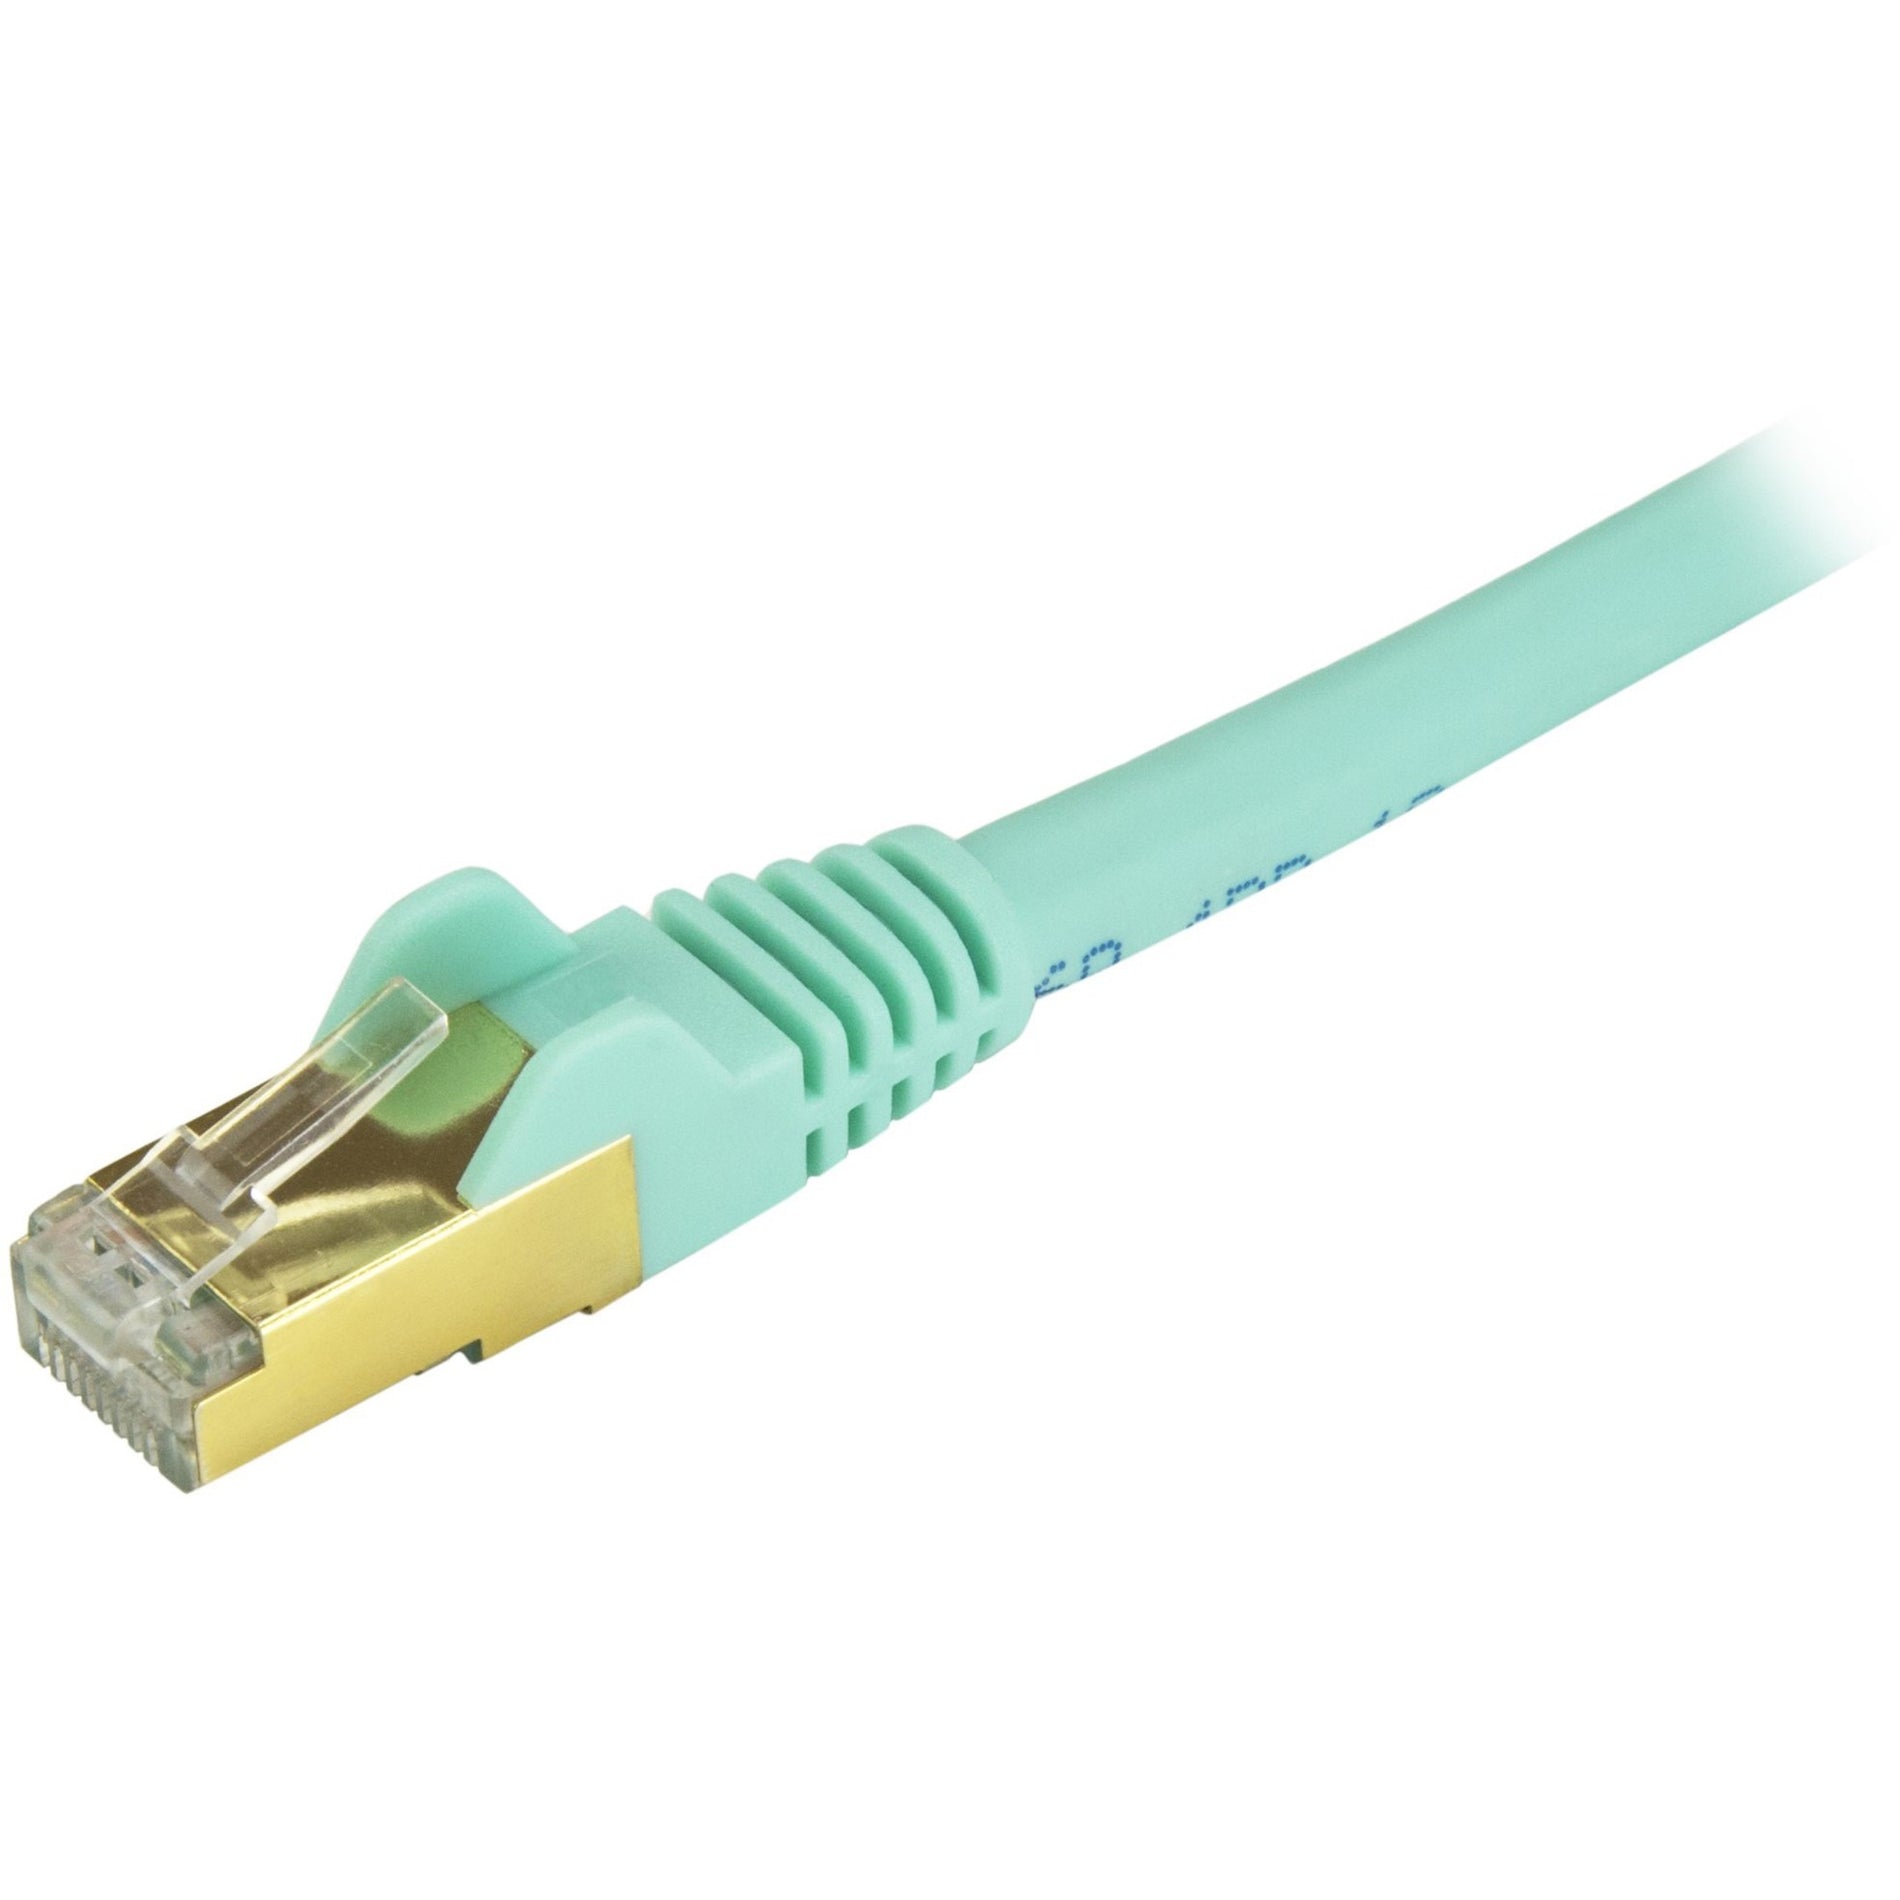 StarTech.com C6ASPAT7AQ Cat6a Ethernet Patch Cable - Shielded (STP) - 7 ft., Aqua, Snagless RJ45 Ethernet Cord